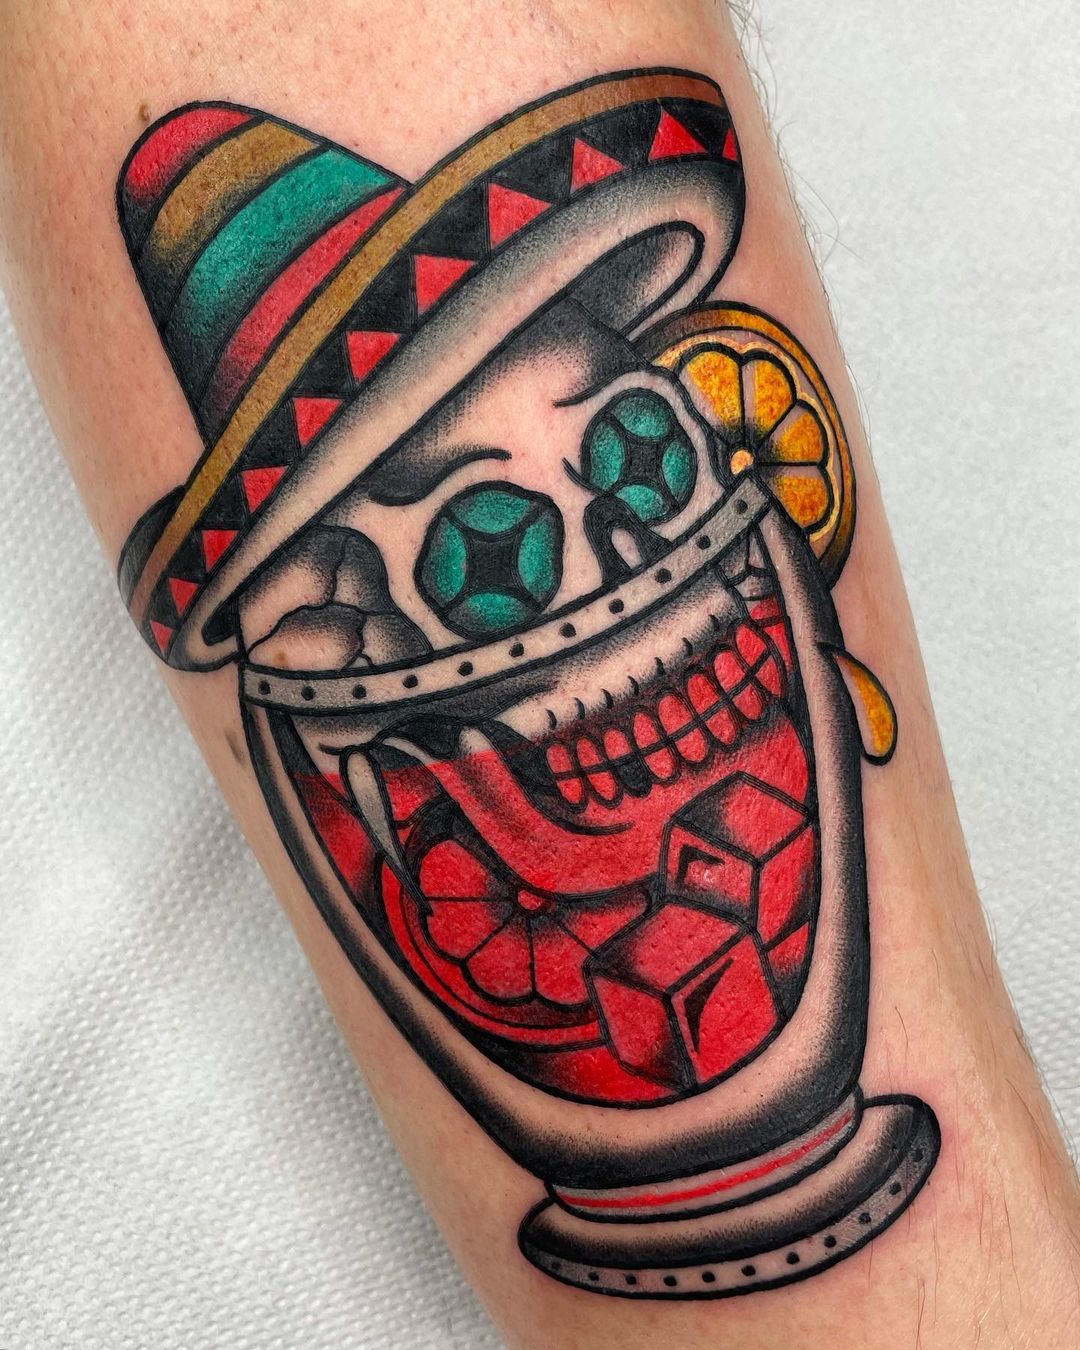 Skull Sombrero Tattoo Vector Images over 510